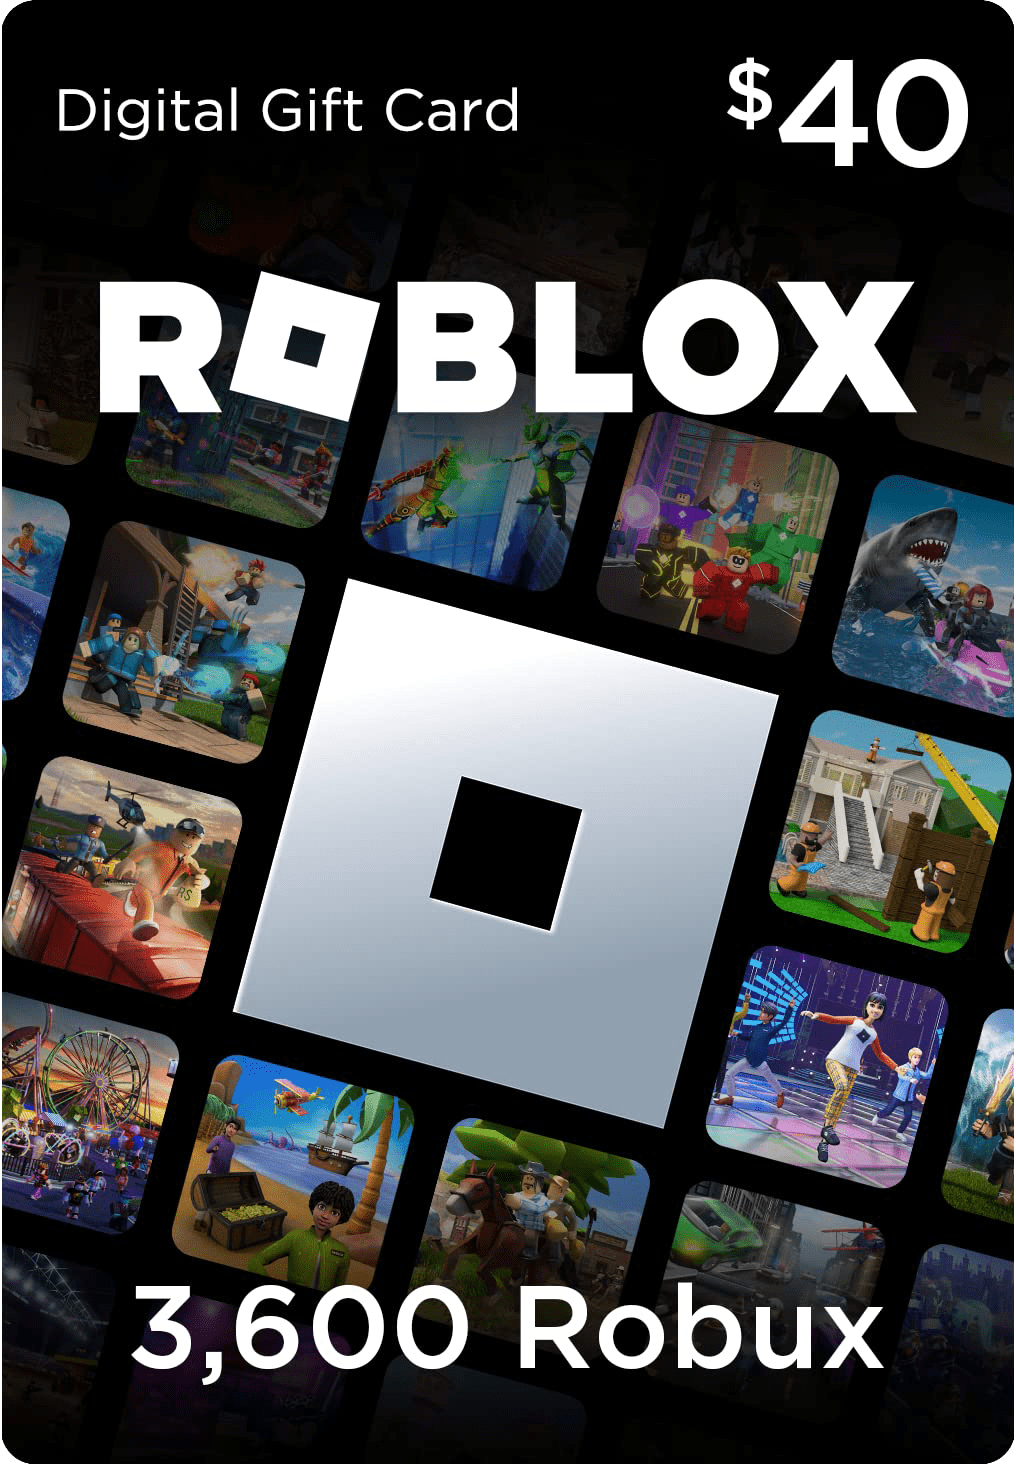 Roblox Digital Gift Card | 3,600 Robux